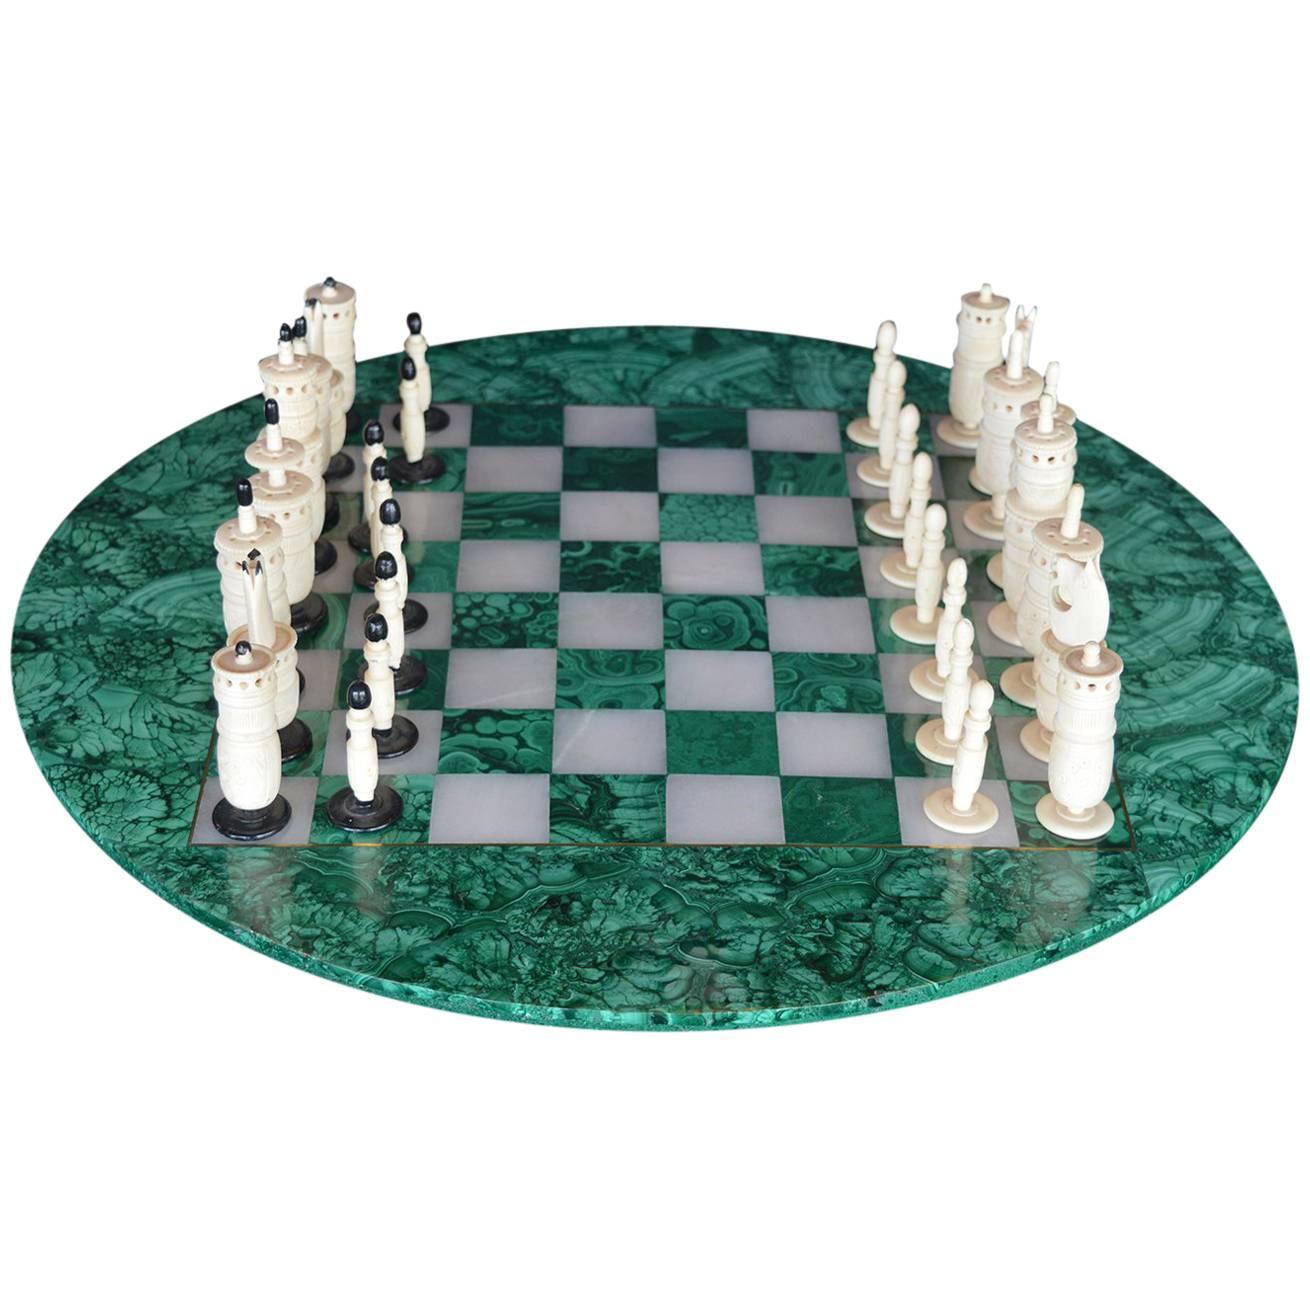 Malachite and Marble Chess Set